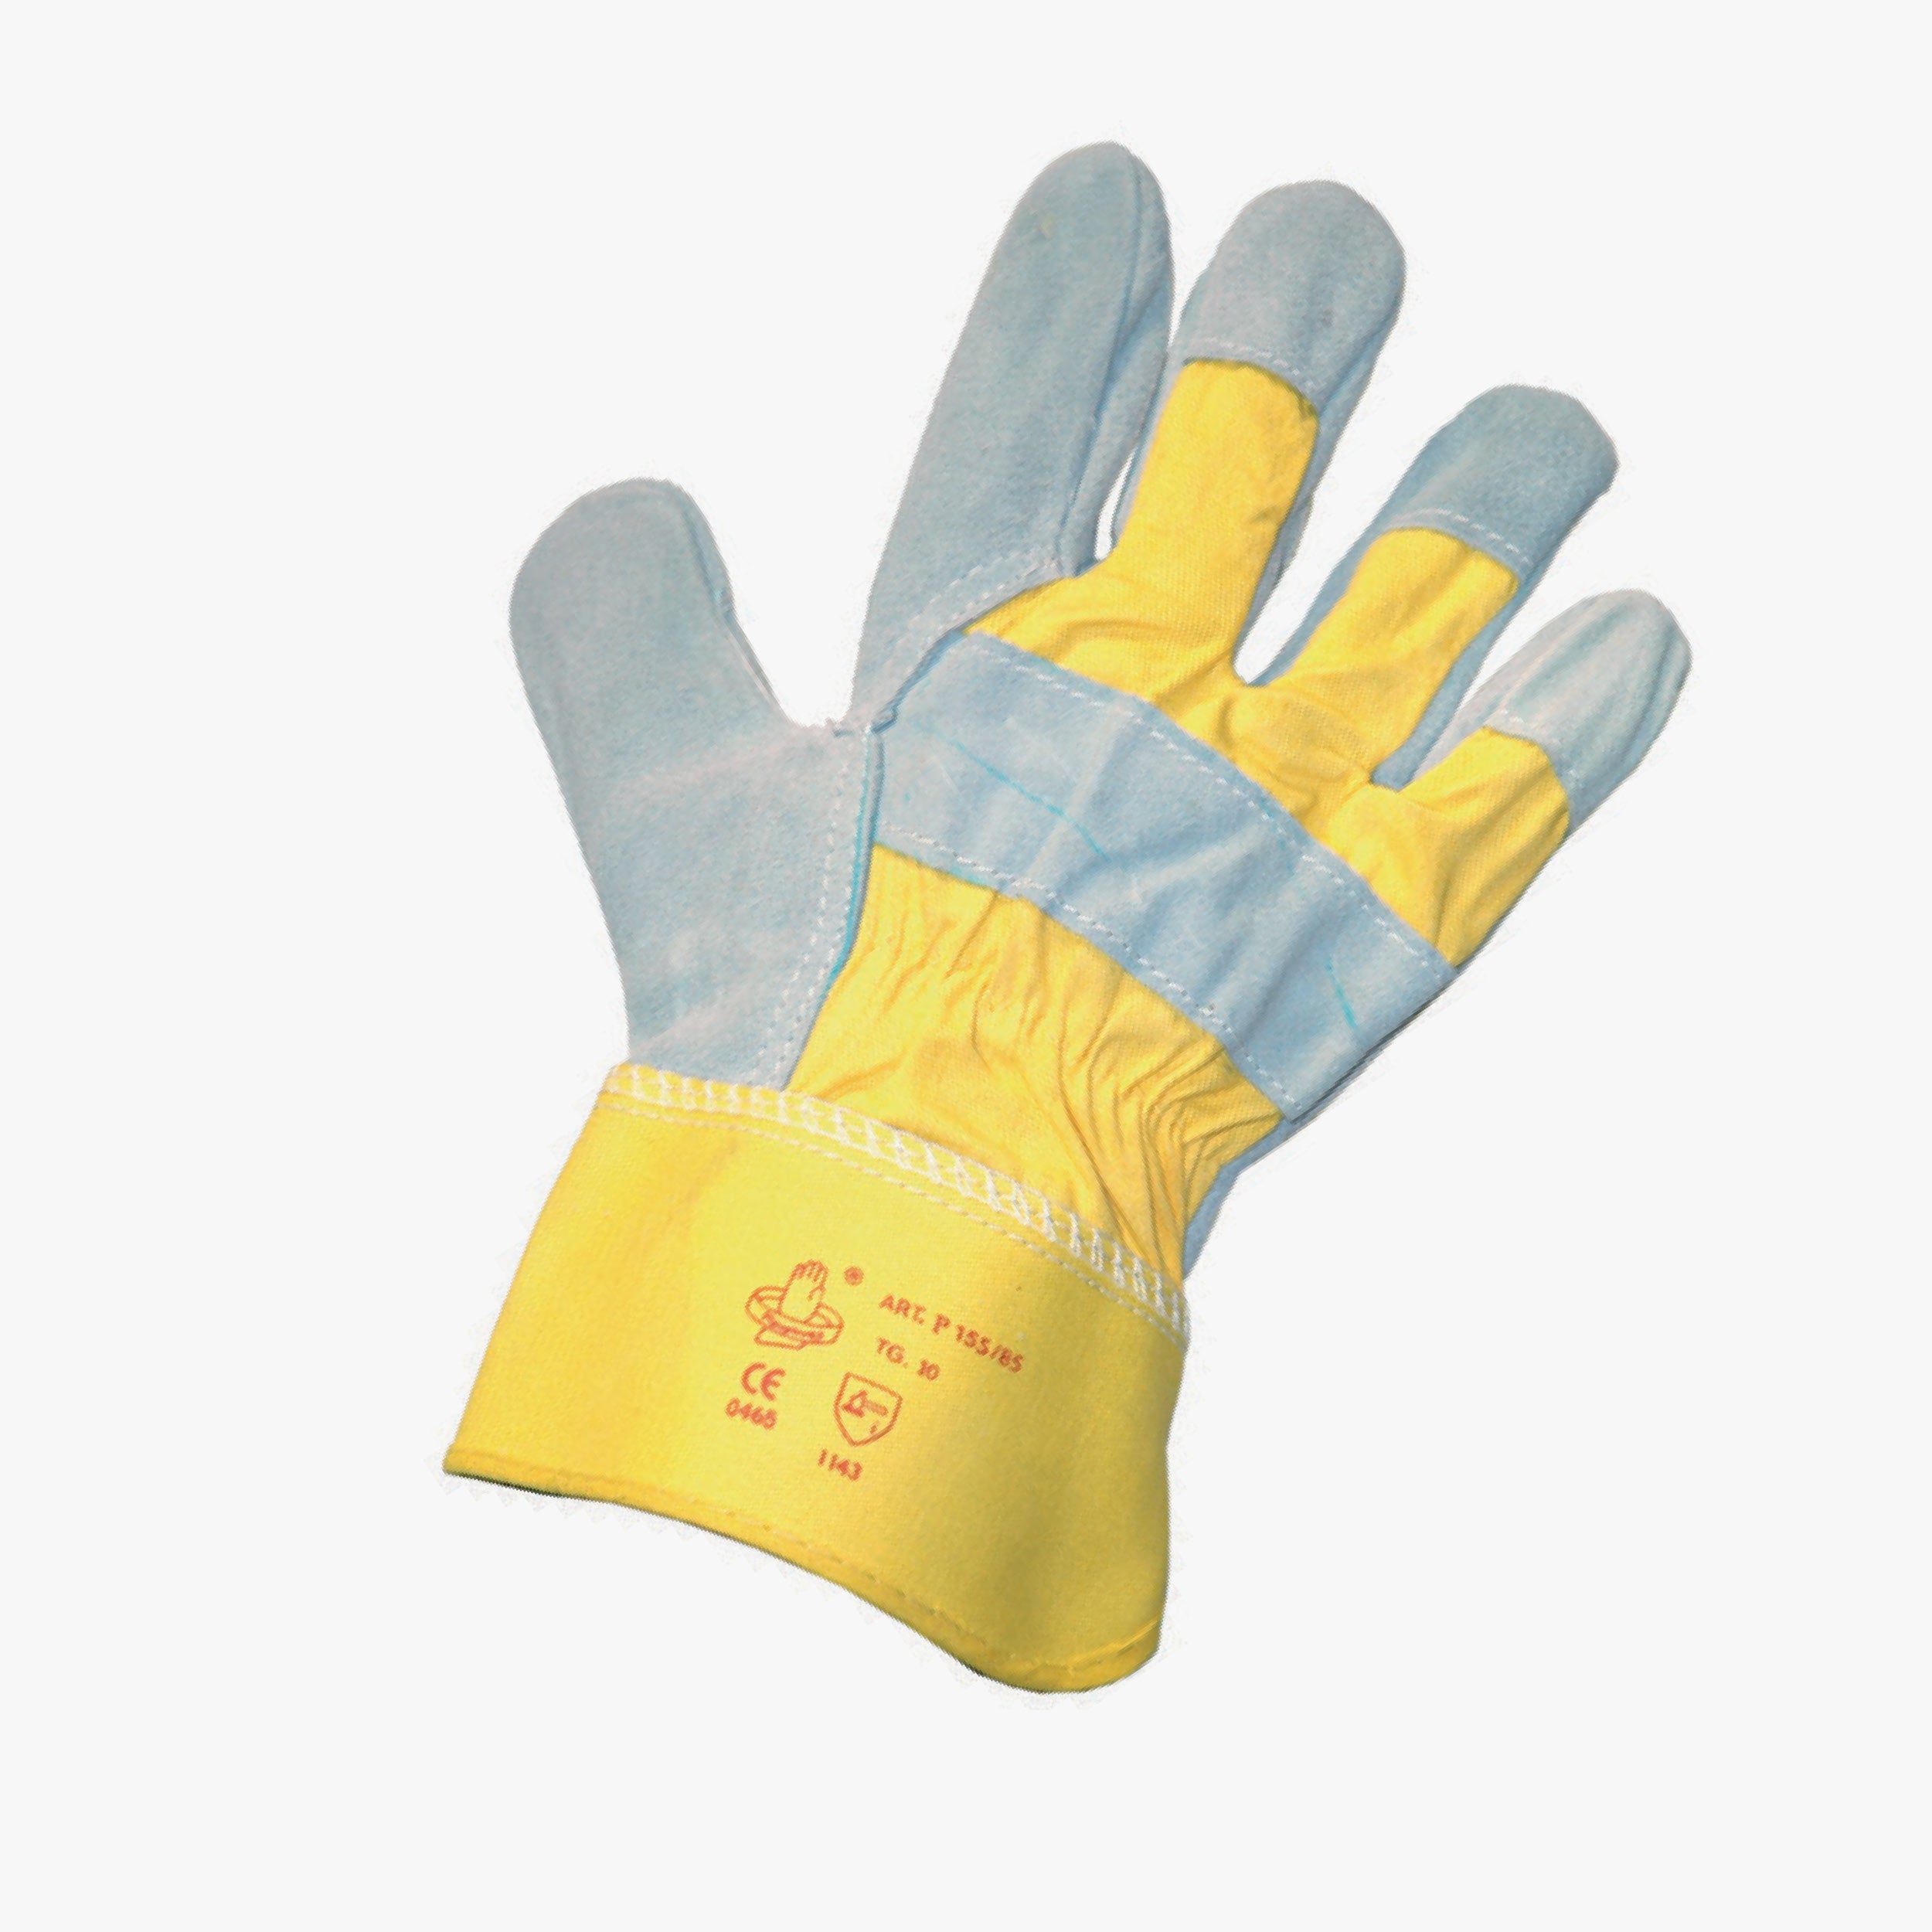 CROSTA DORSO gloves handle canvas YELLOW size 10 - 10pcs